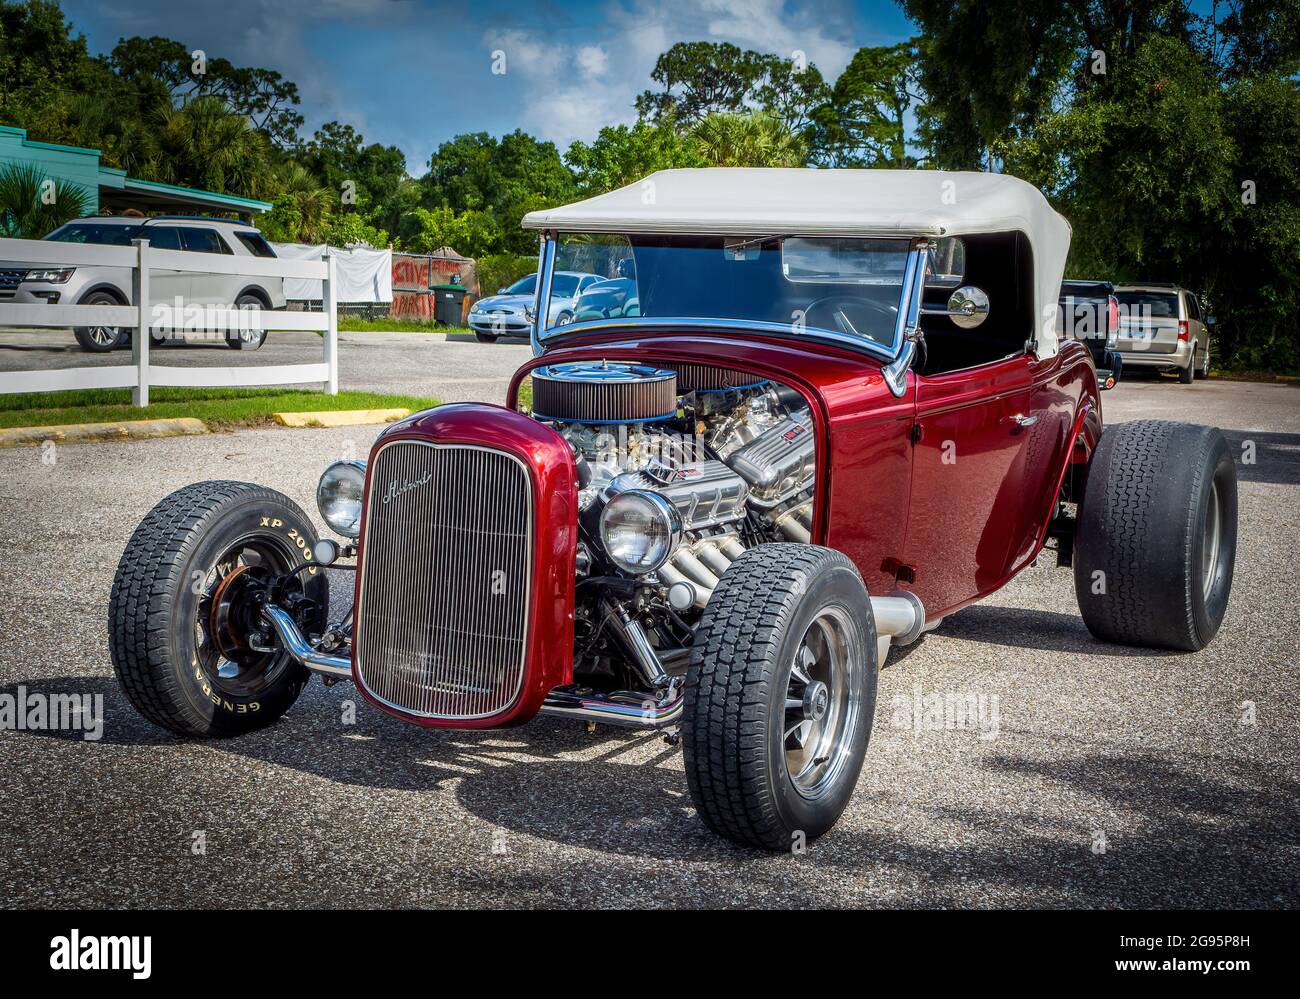 American custom hot rod cars at the Cruisin' on Dearborn Street car show in  Englewood Florida USA Stock Photo - Alamy